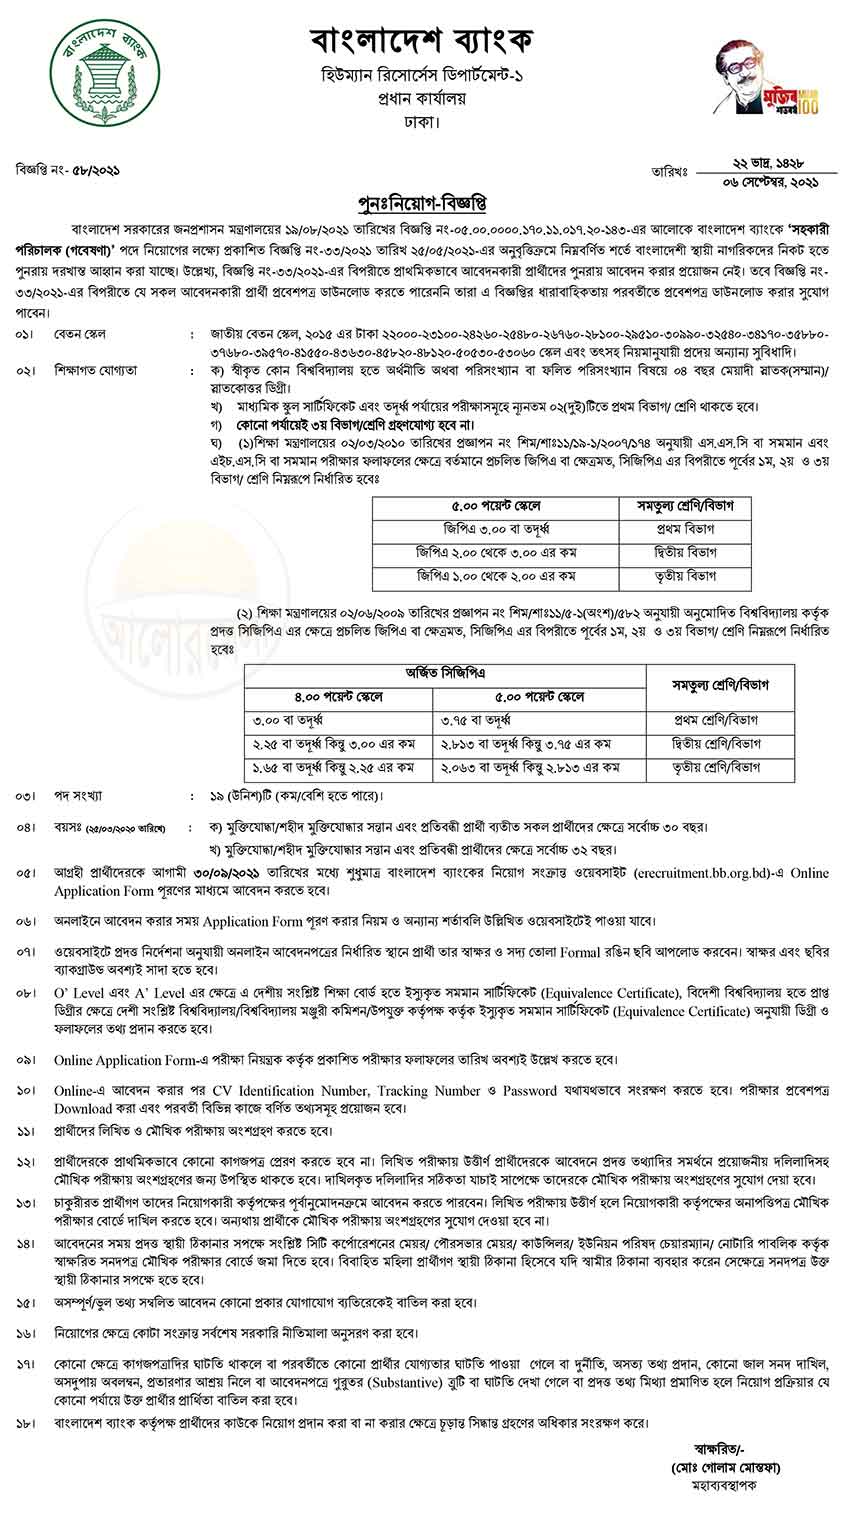 Bangladesh bank assistant director recruitment research